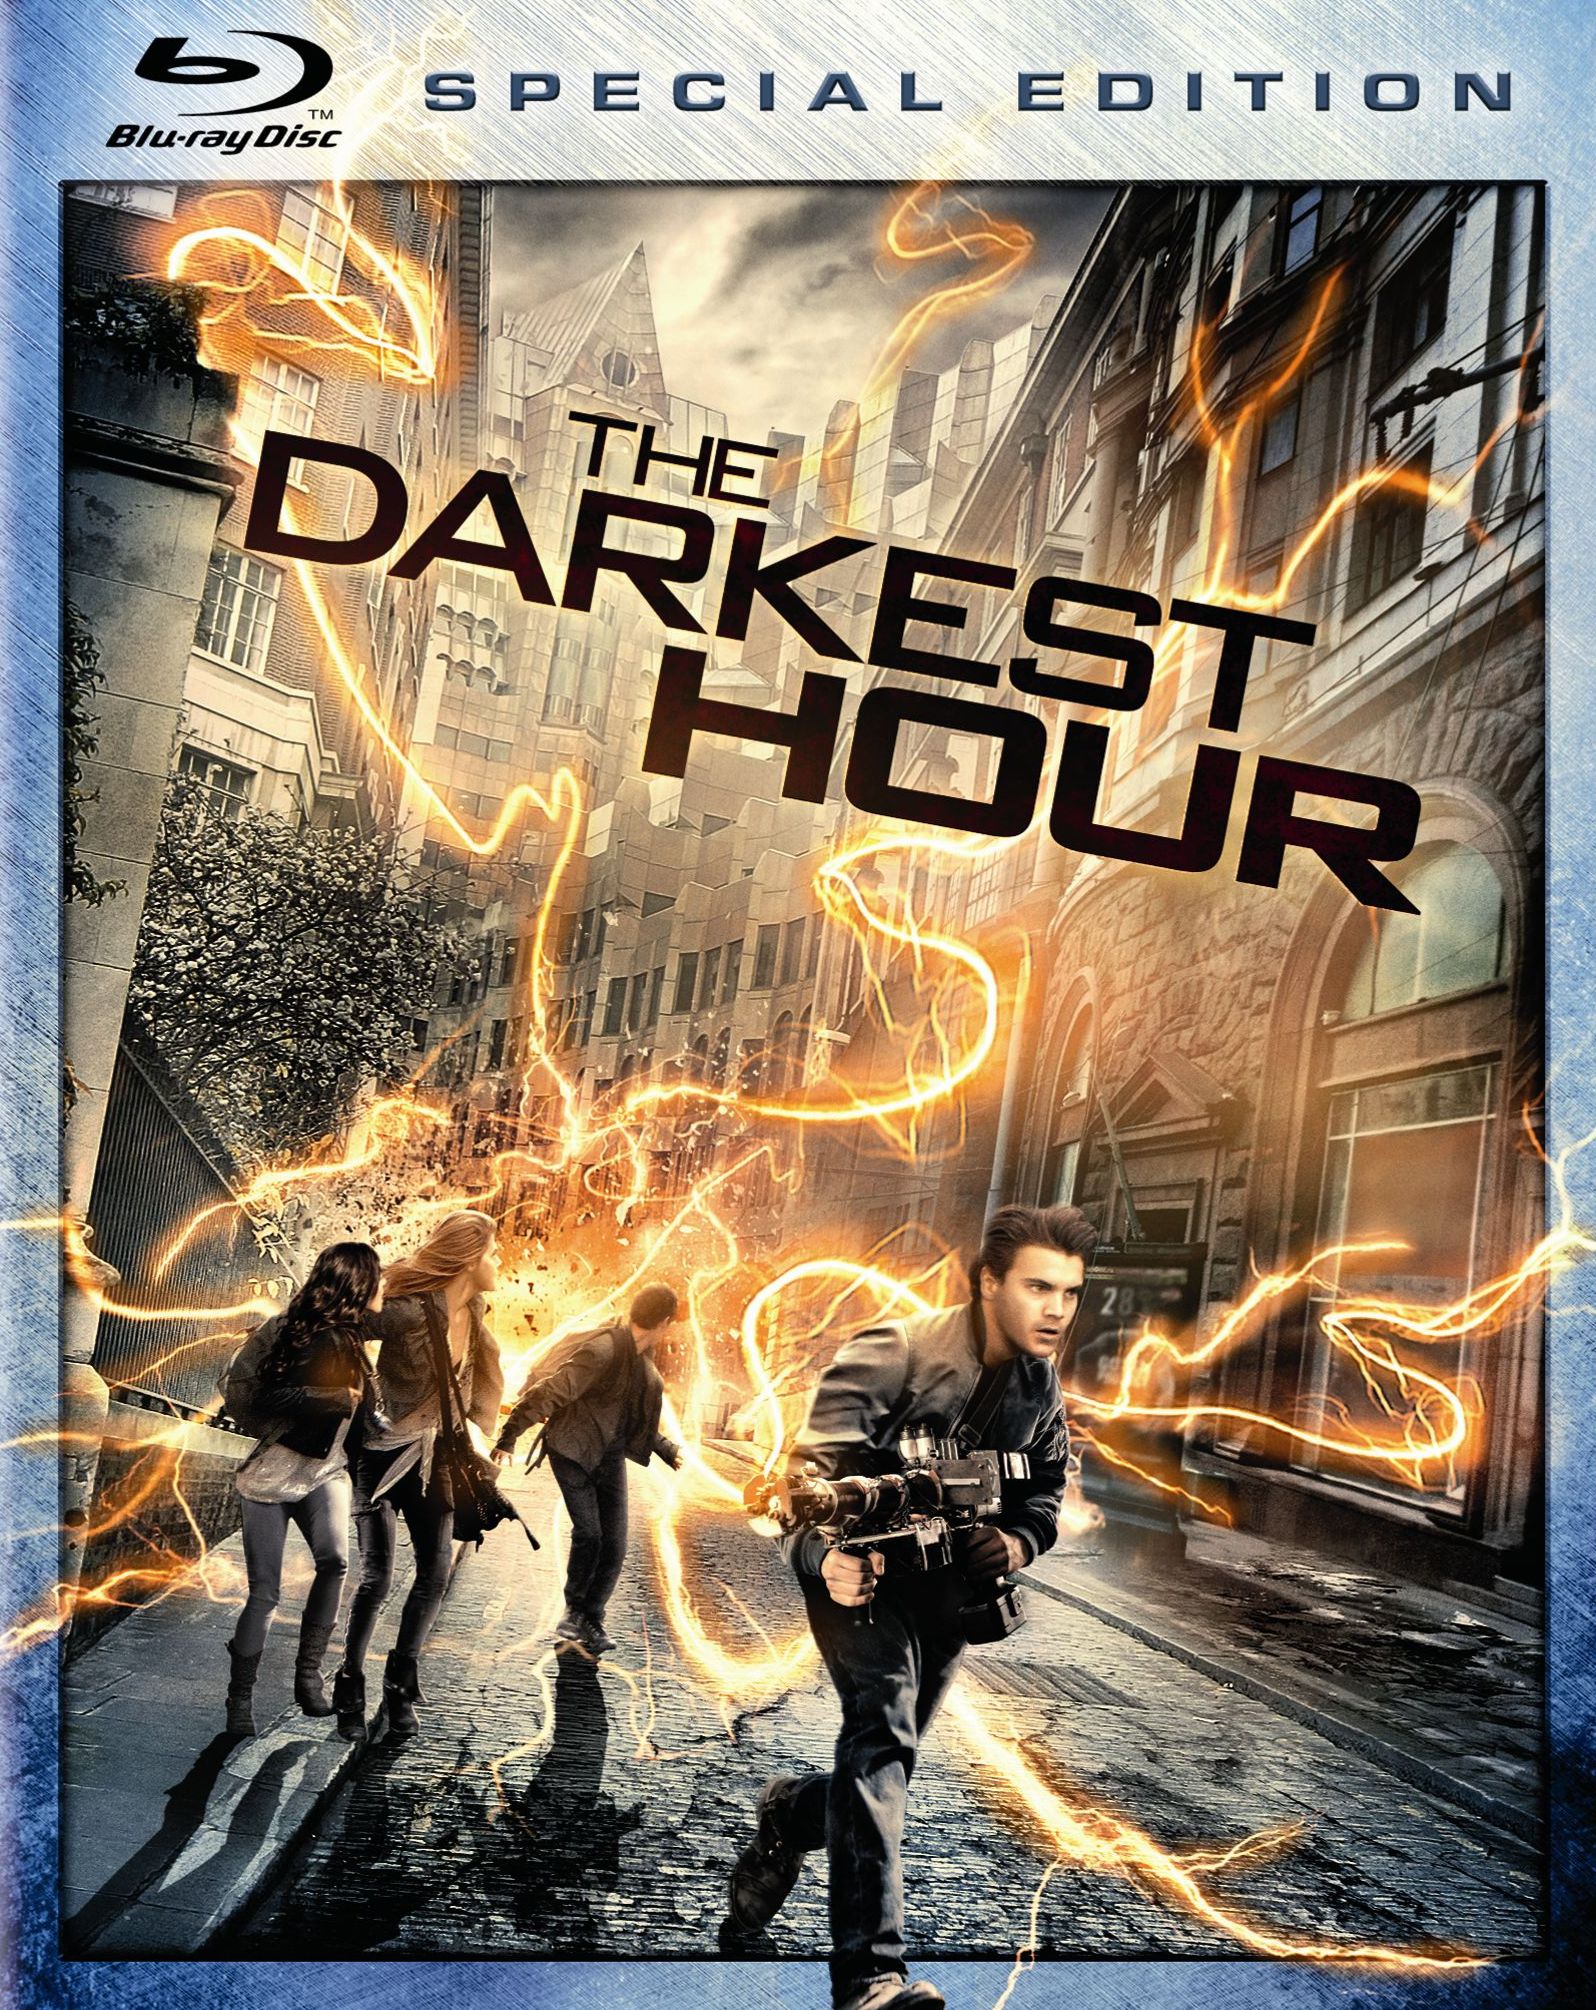 The Darkest Hour (2011) Wallpapers